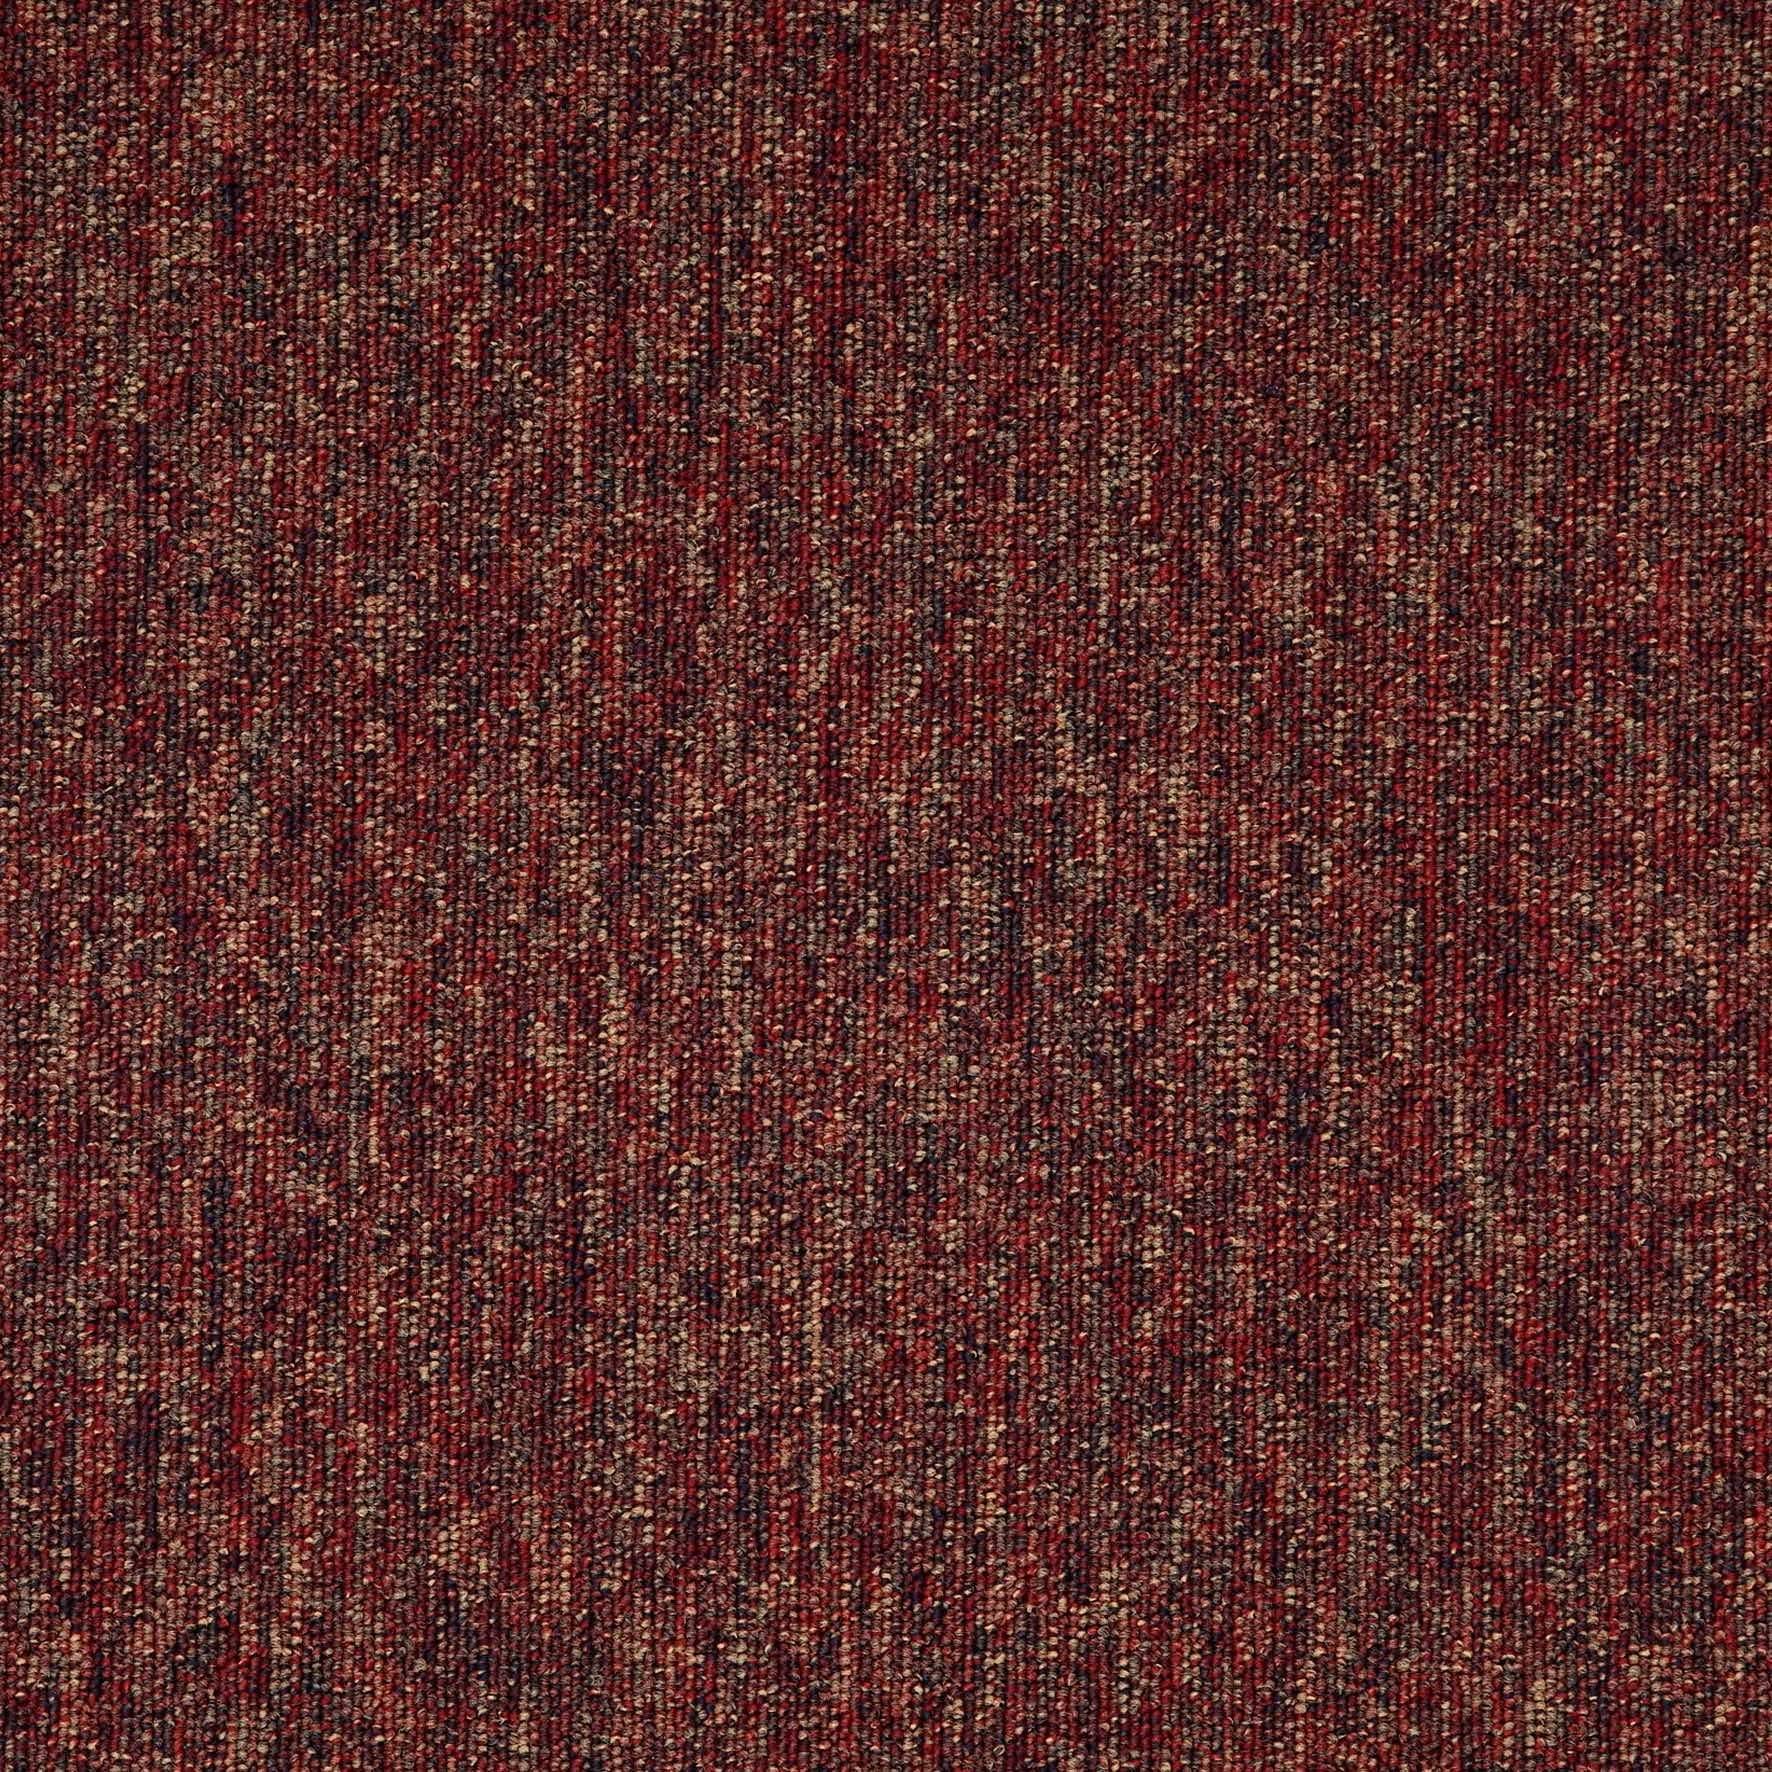 Paragon Macaw Carpet Tile Paprika